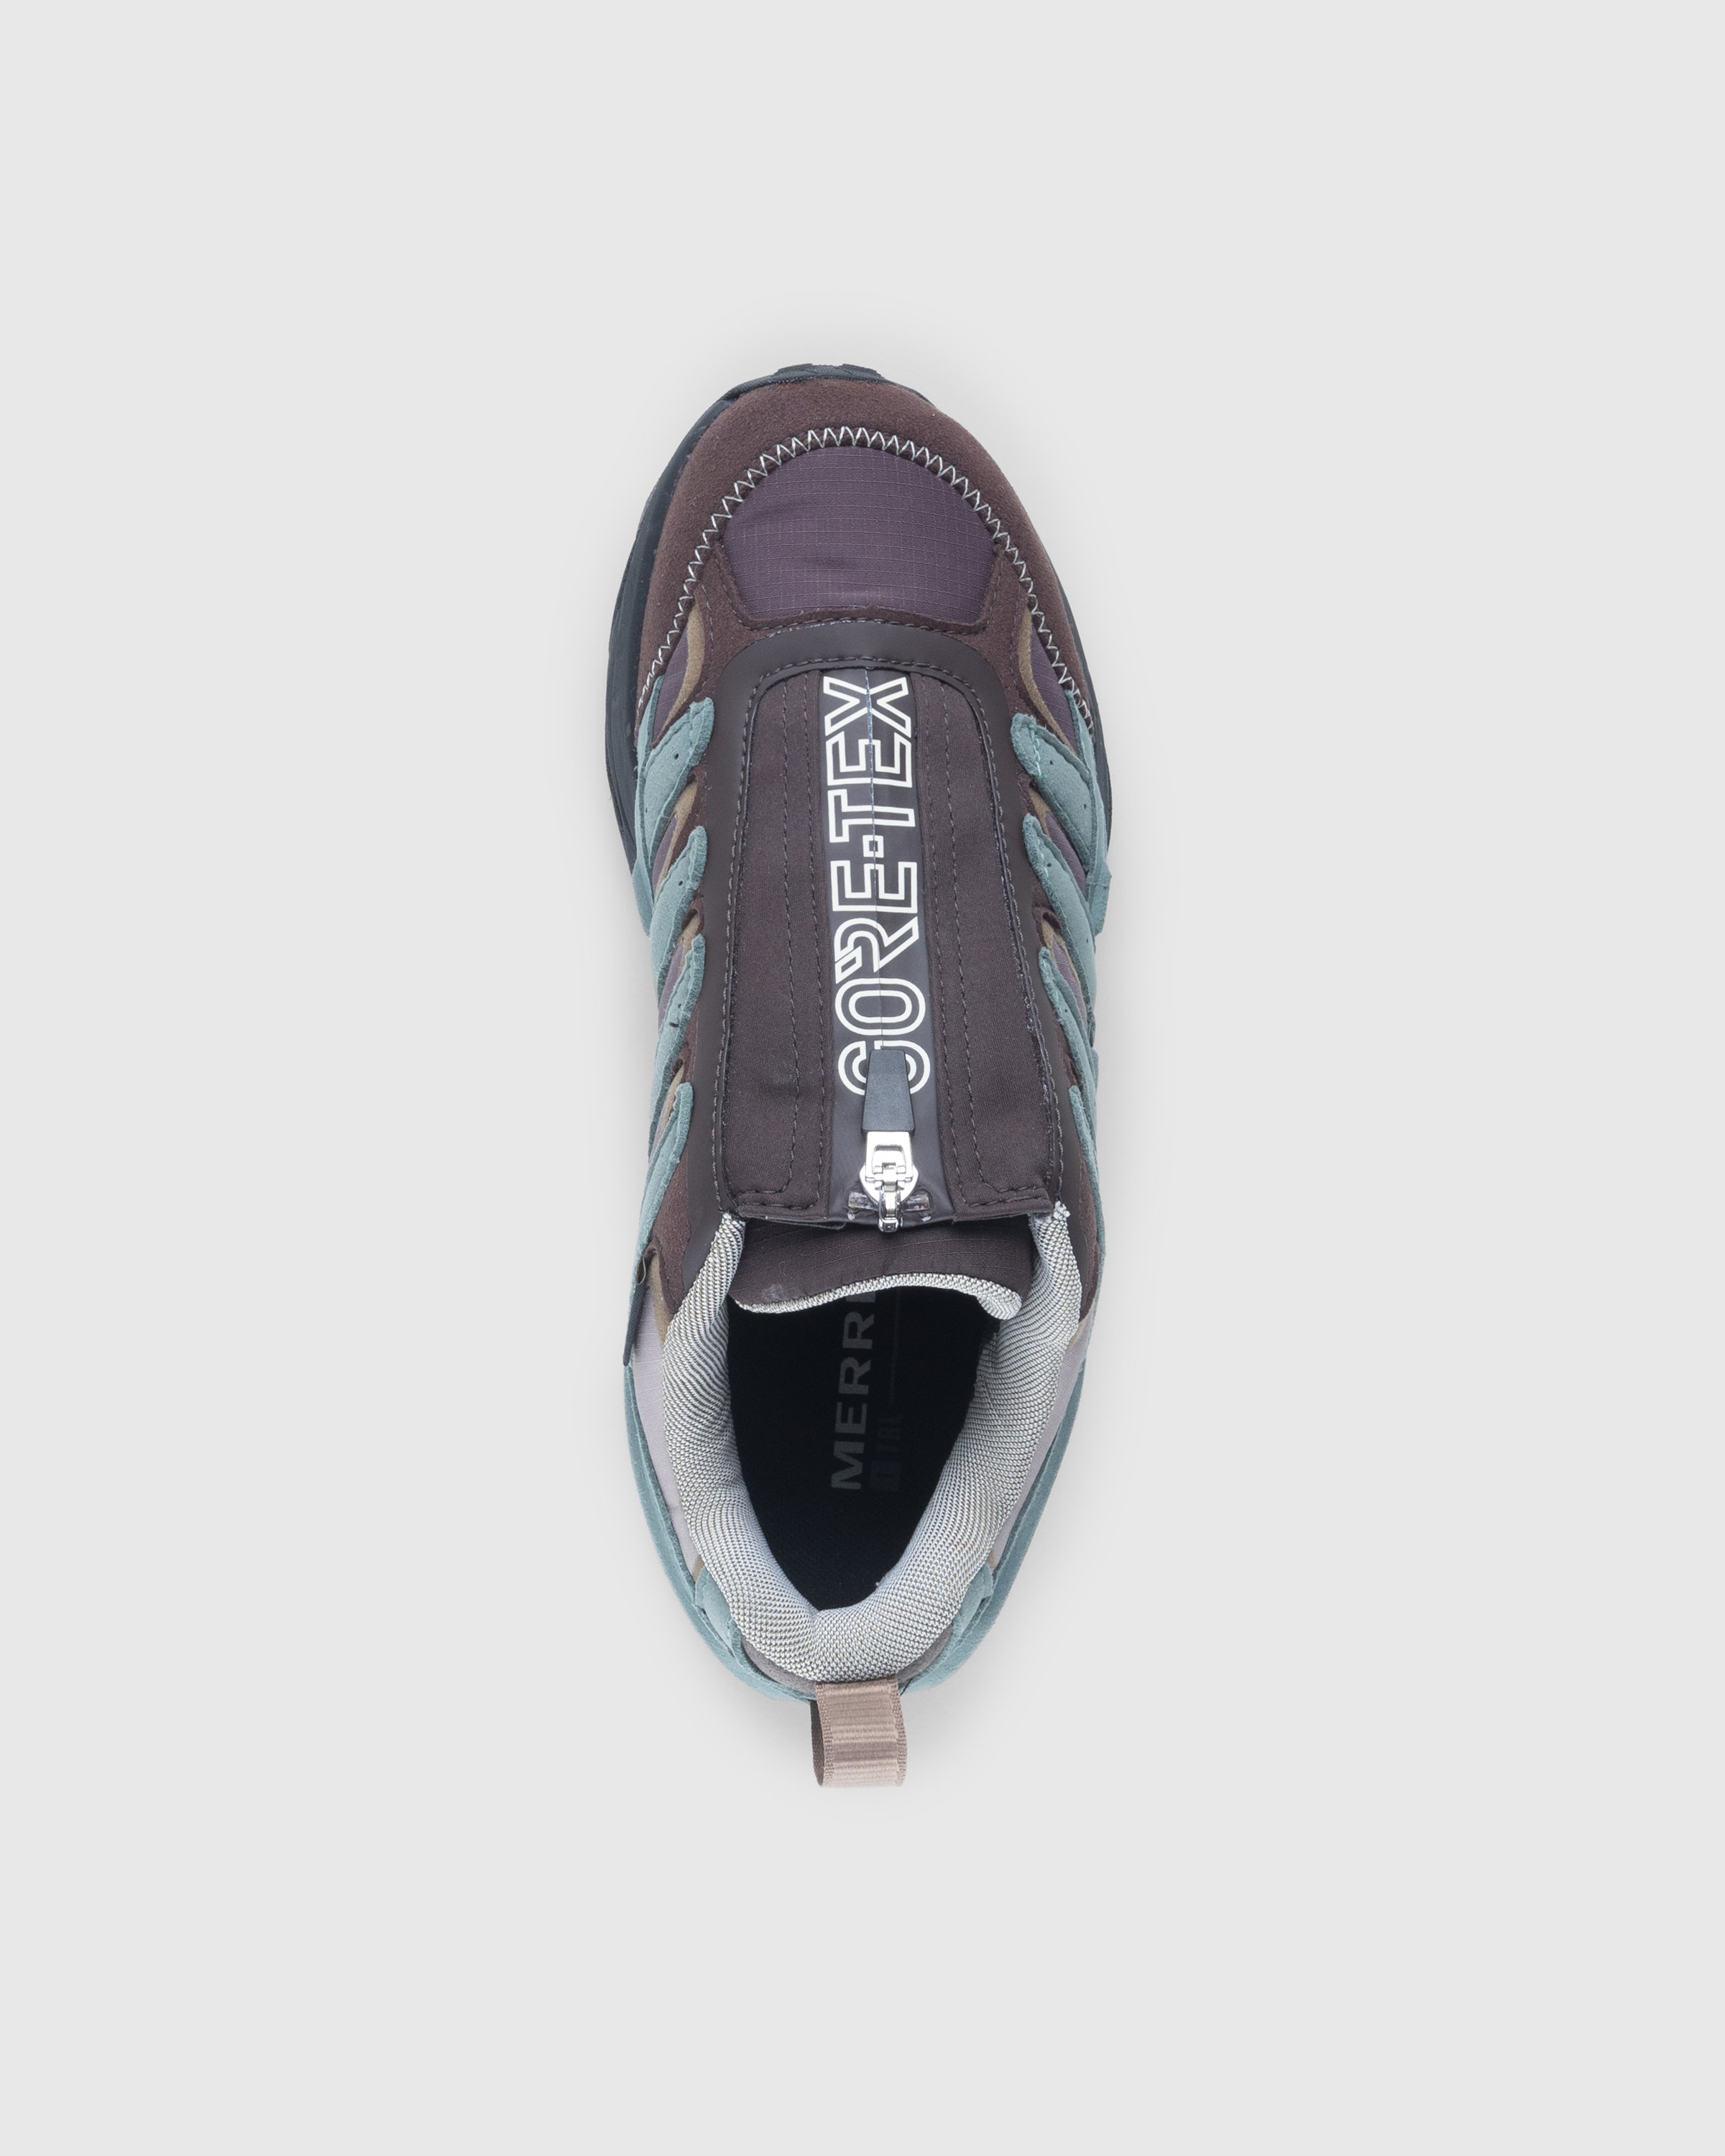 Merrell - Moab Speed Zip GORE-TEX Forest/Espresso - Footwear - Multi - Image 5